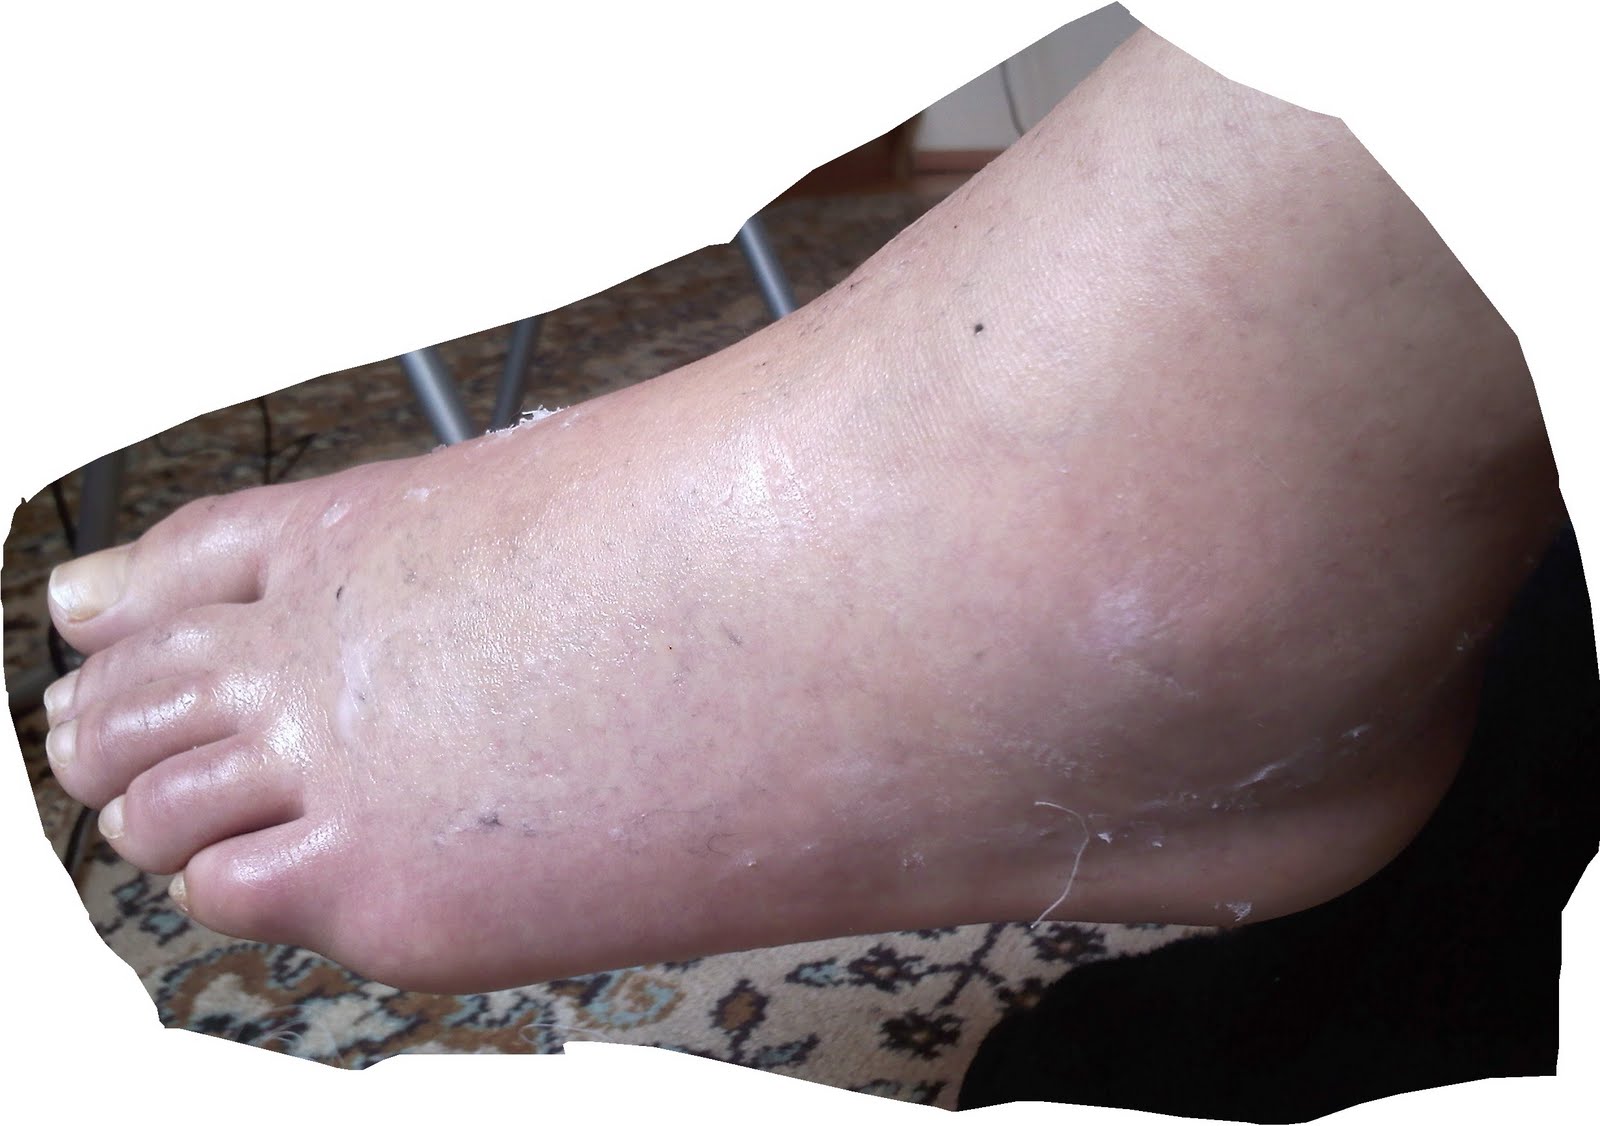 varicoza este un picior foarte umflat wrist varicos